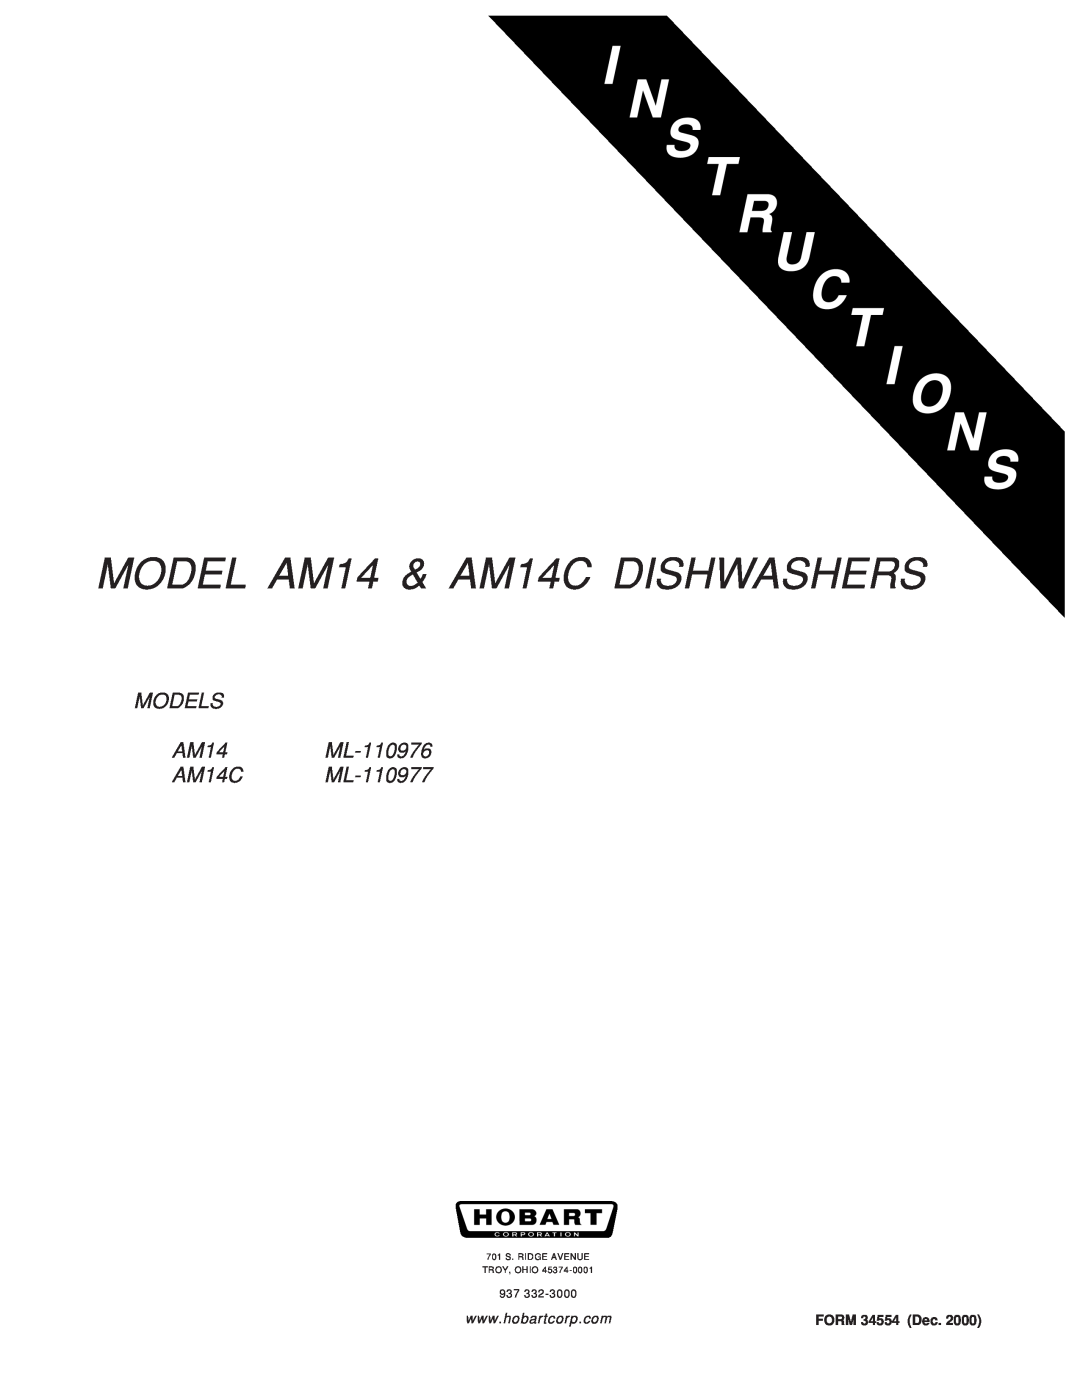 Hobart manual MODEL AM14 & AM14C DISHWASHERS, MODELS AM14 ML-110976 AM14C ML-110977, FORM 34554 Dec 